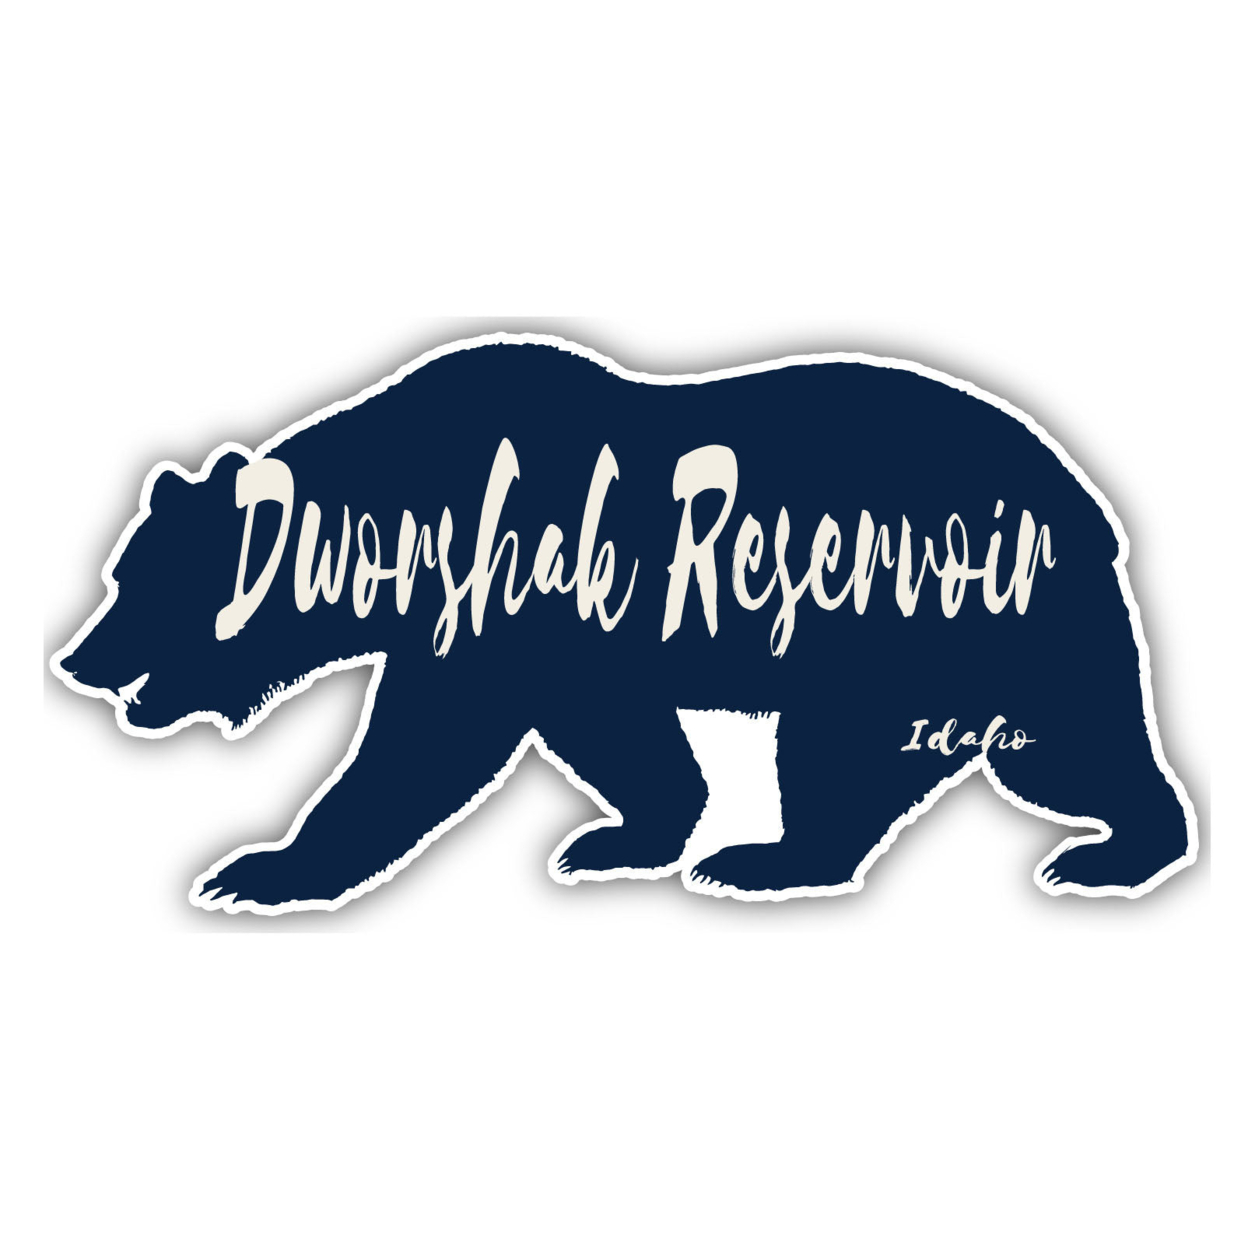 Dworshak Reservoir Idaho Souvenir Decorative Stickers (Choose Theme And Size) - 4-Pack, 12-Inch, Bear